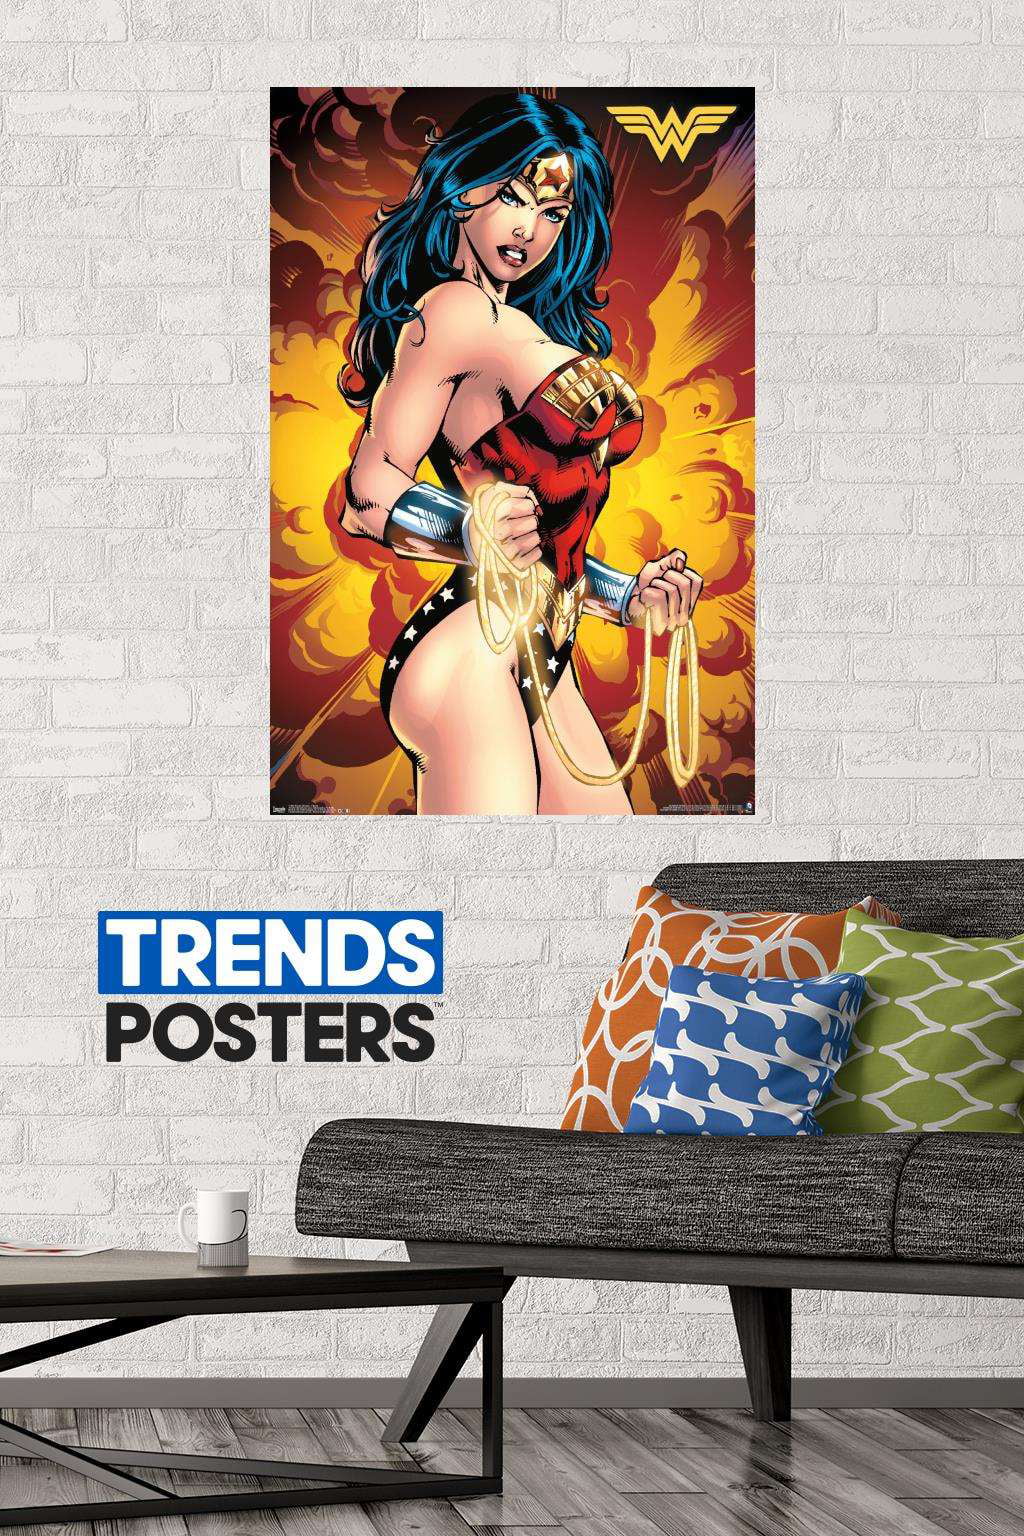 DC Comics - Wonder Woman - Vibrant Wall Poster, 22.375